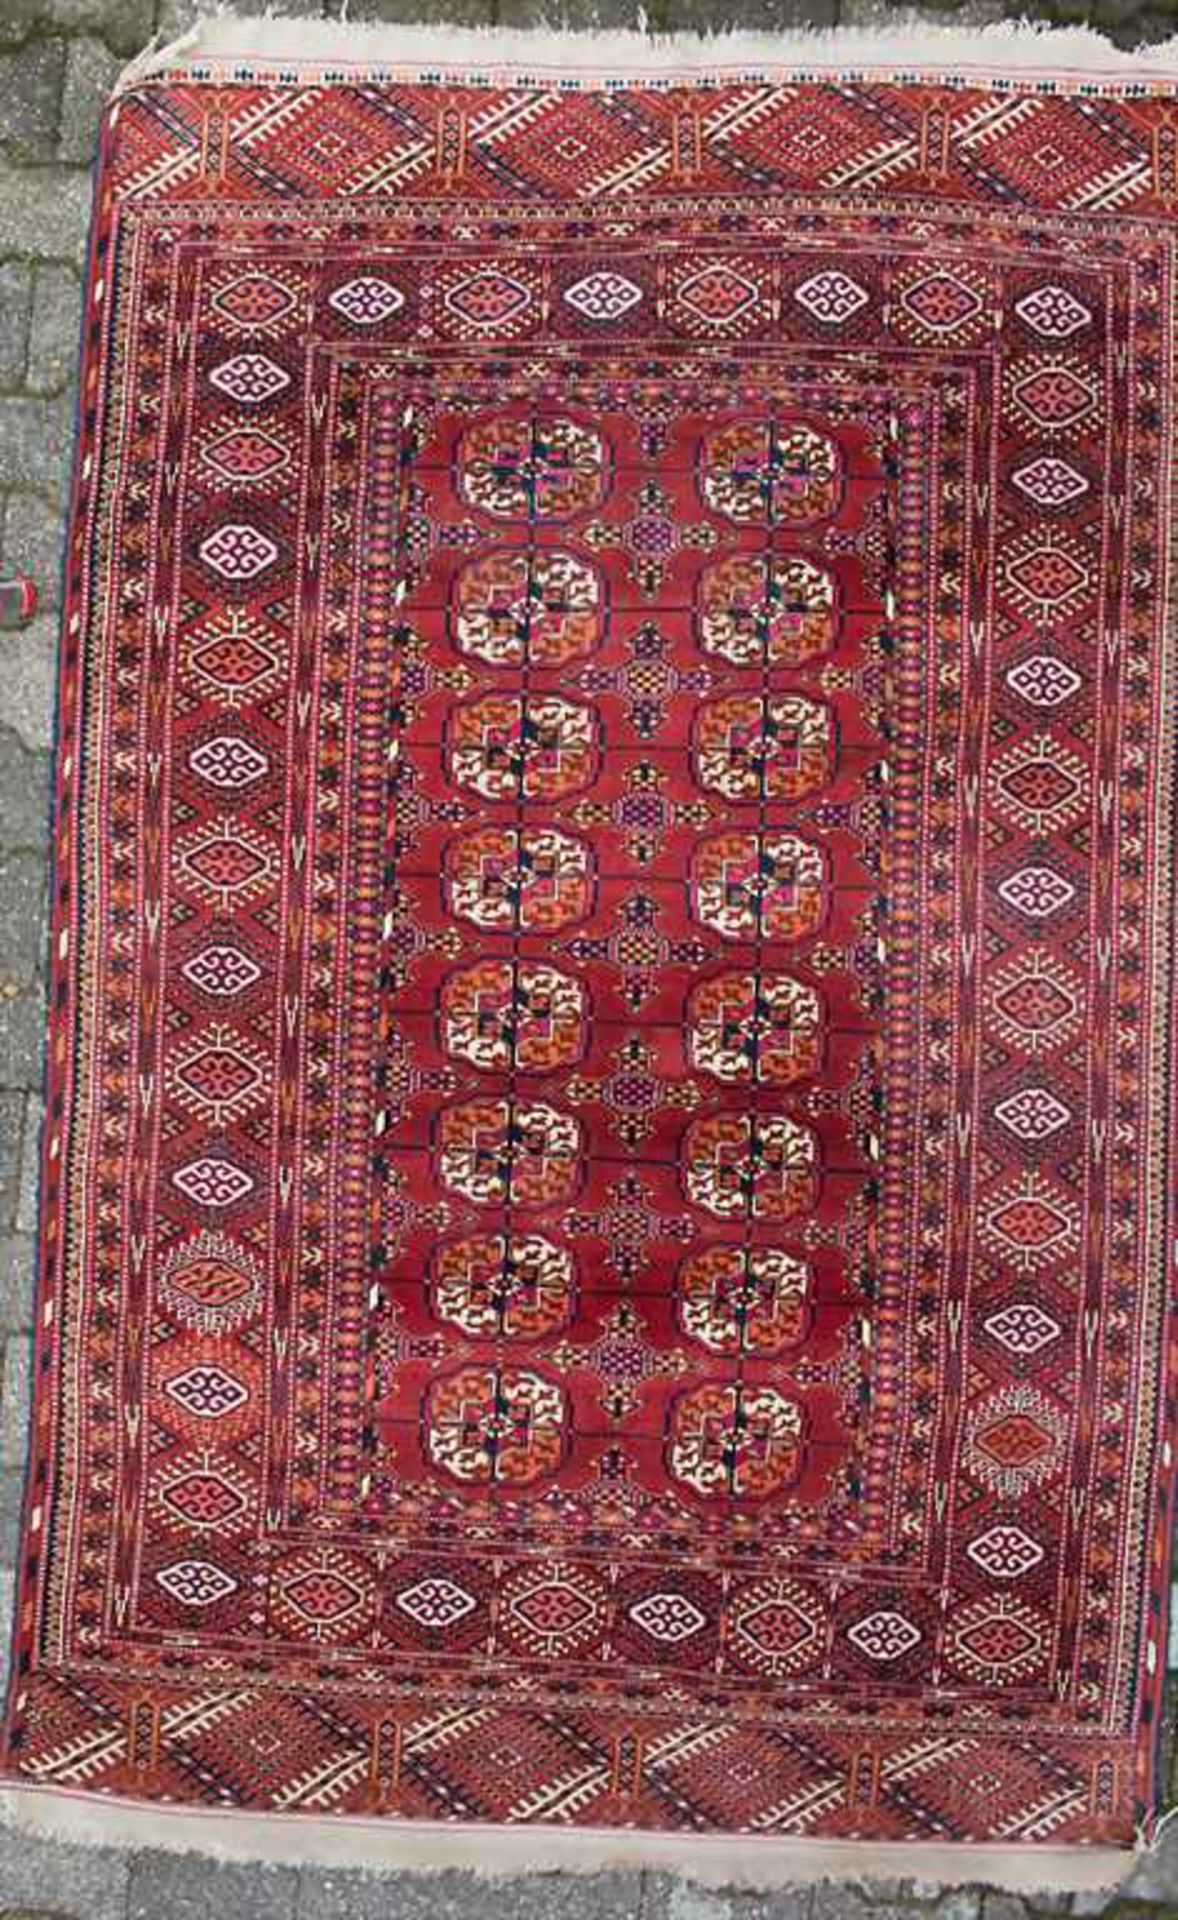 Orientteppich 'Belutsch' / An oriental carpet 'Belutsh'Material: Wolle, Maße: 218 x 135 cm, Zustand: